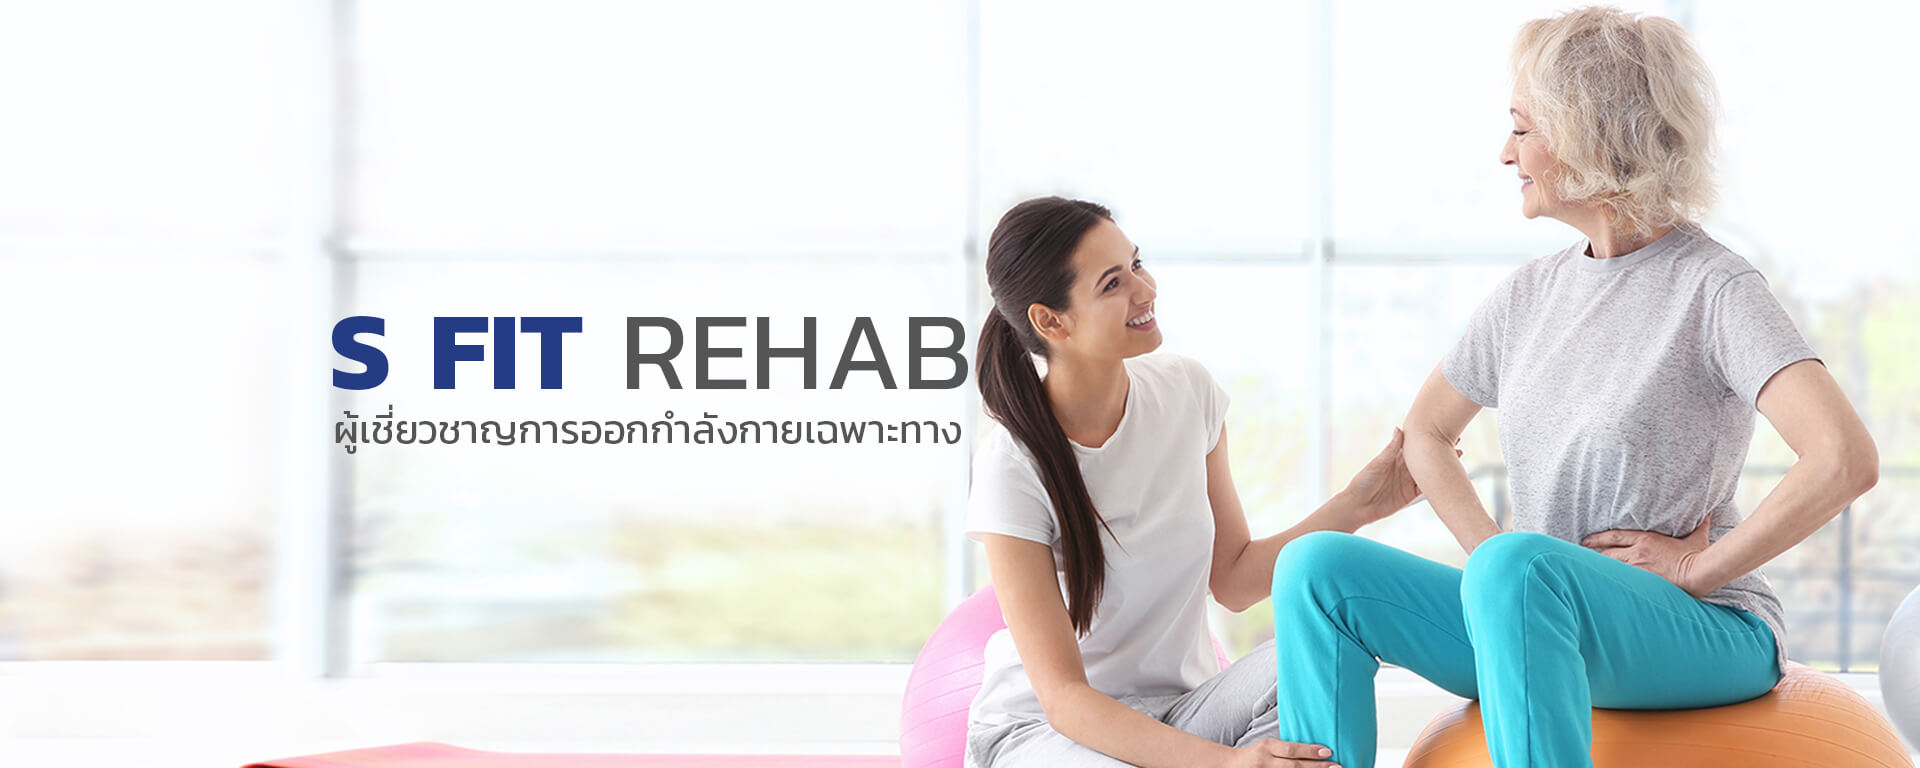 S Fit Rehab Spine Expert คลินิกที่ทำกายภาพบำบัดที่มีผู้เชี่ยวชาญ